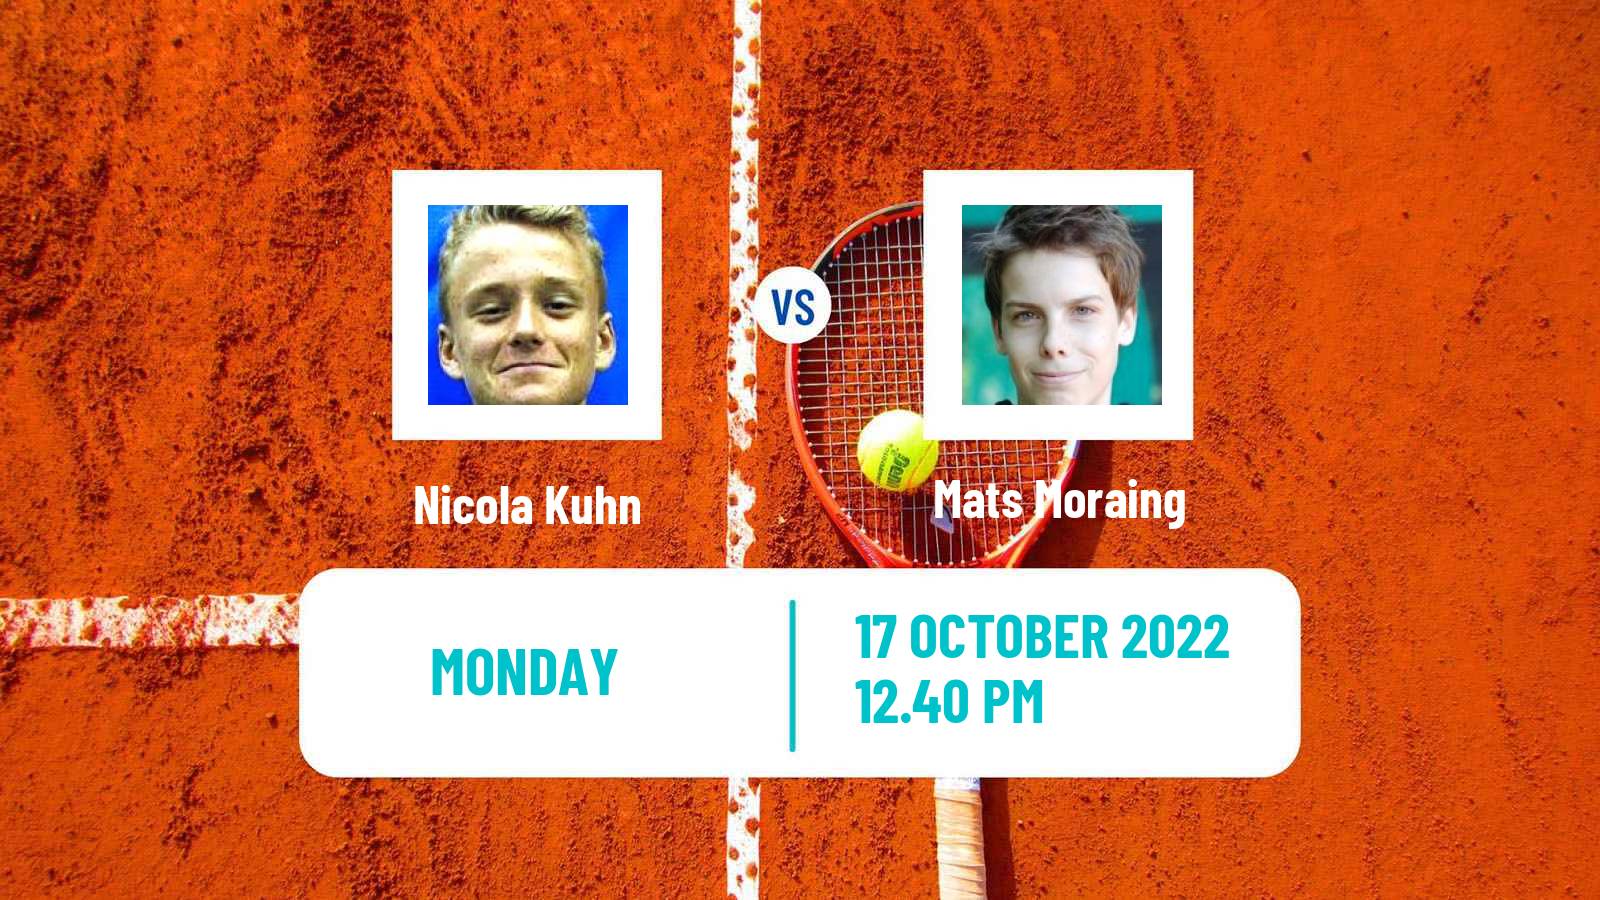 Tennis ATP Challenger Nicola Kuhn - Mats Moraing